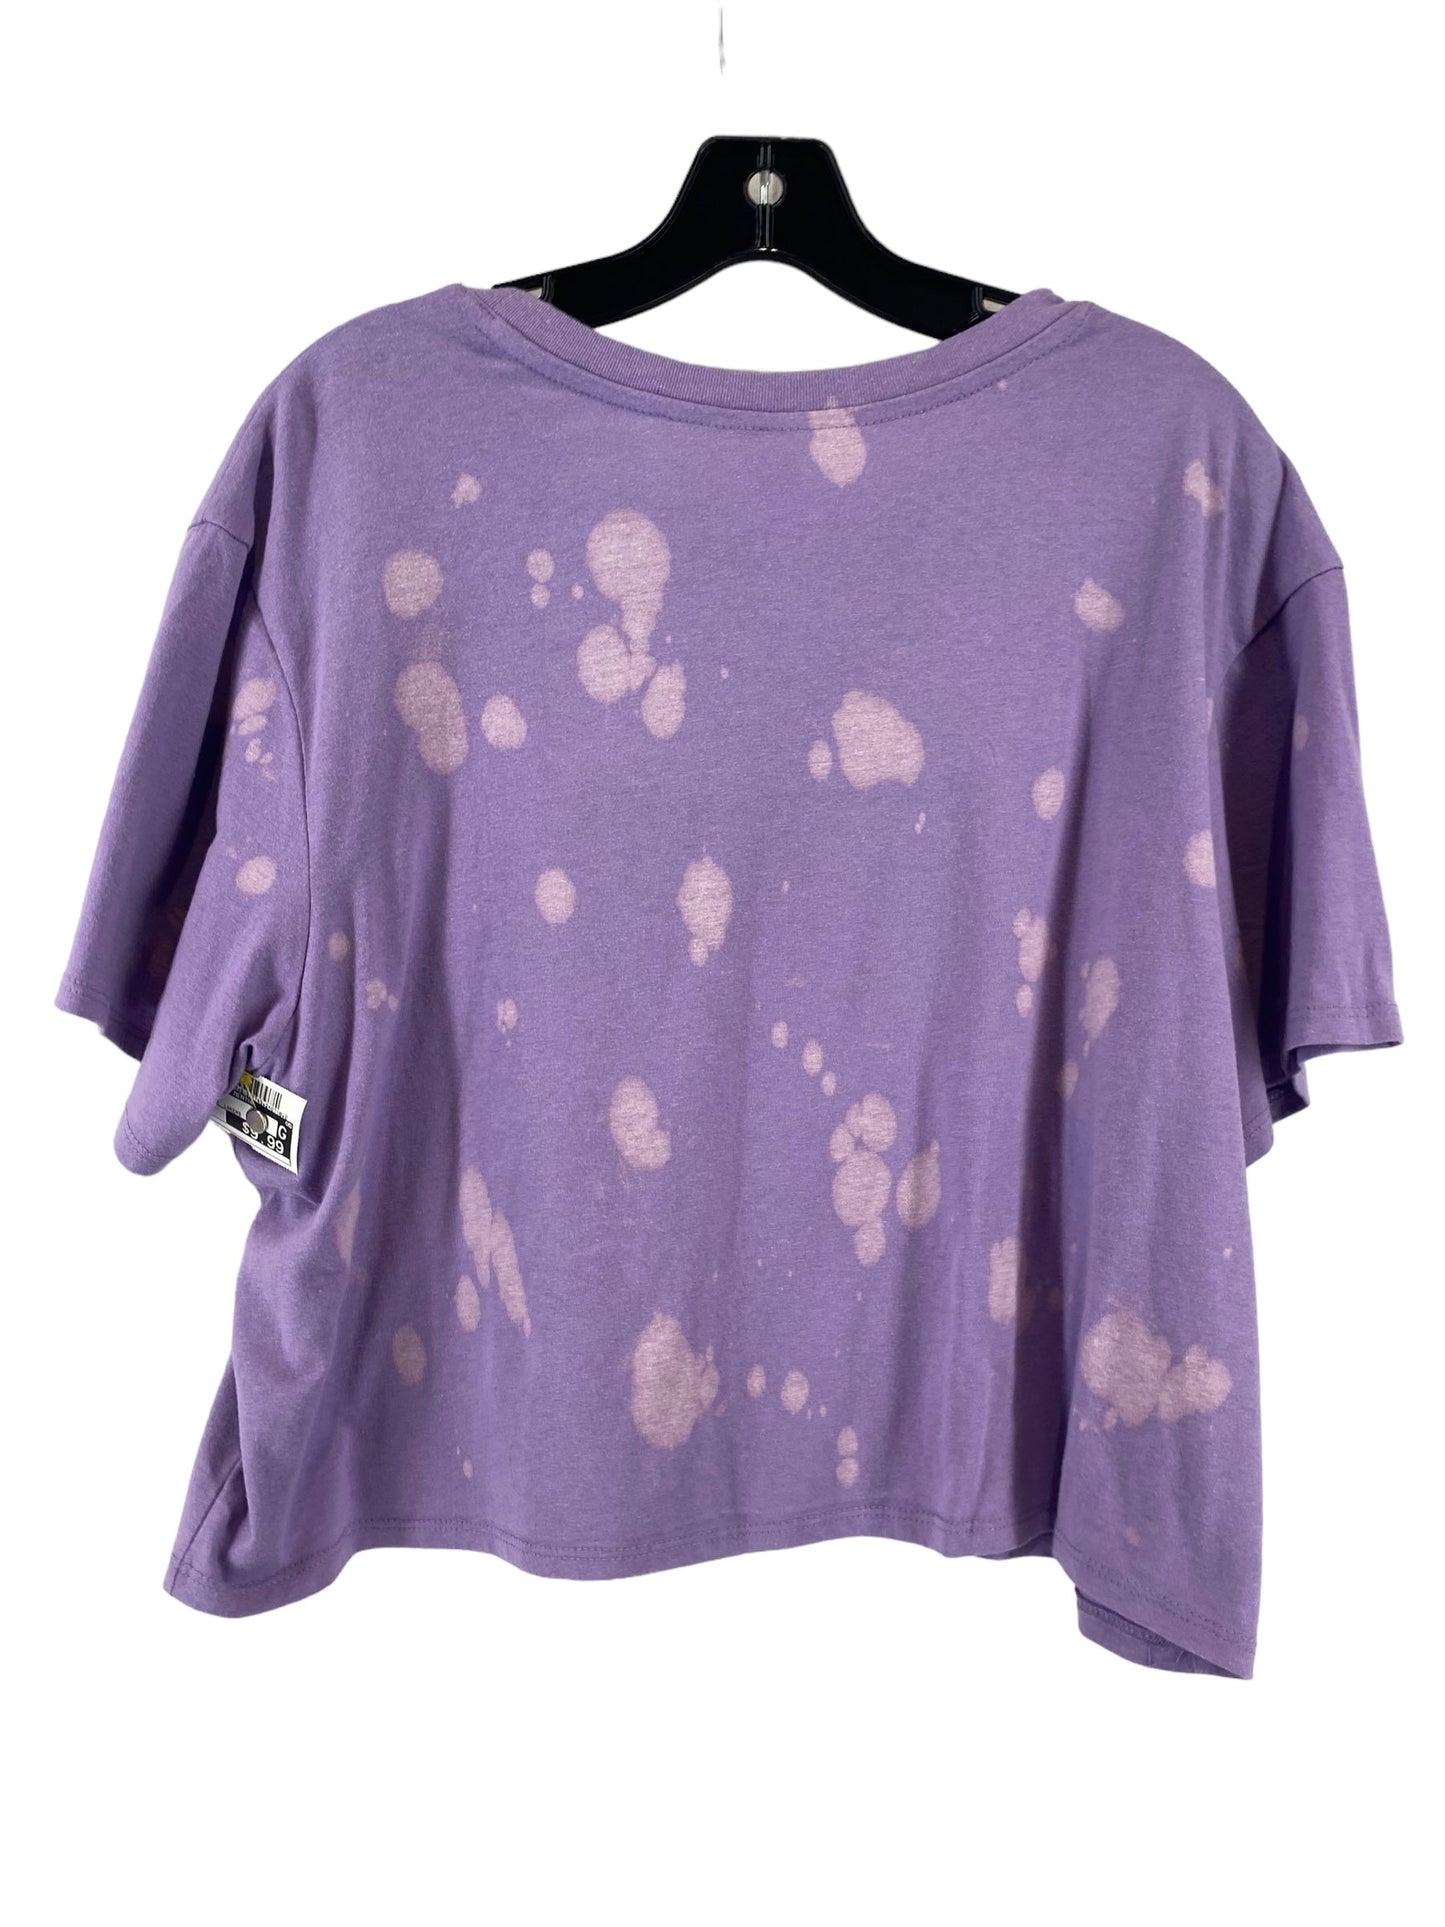 Purple Top Short Sleeve Clothes Mentor, Size Xl